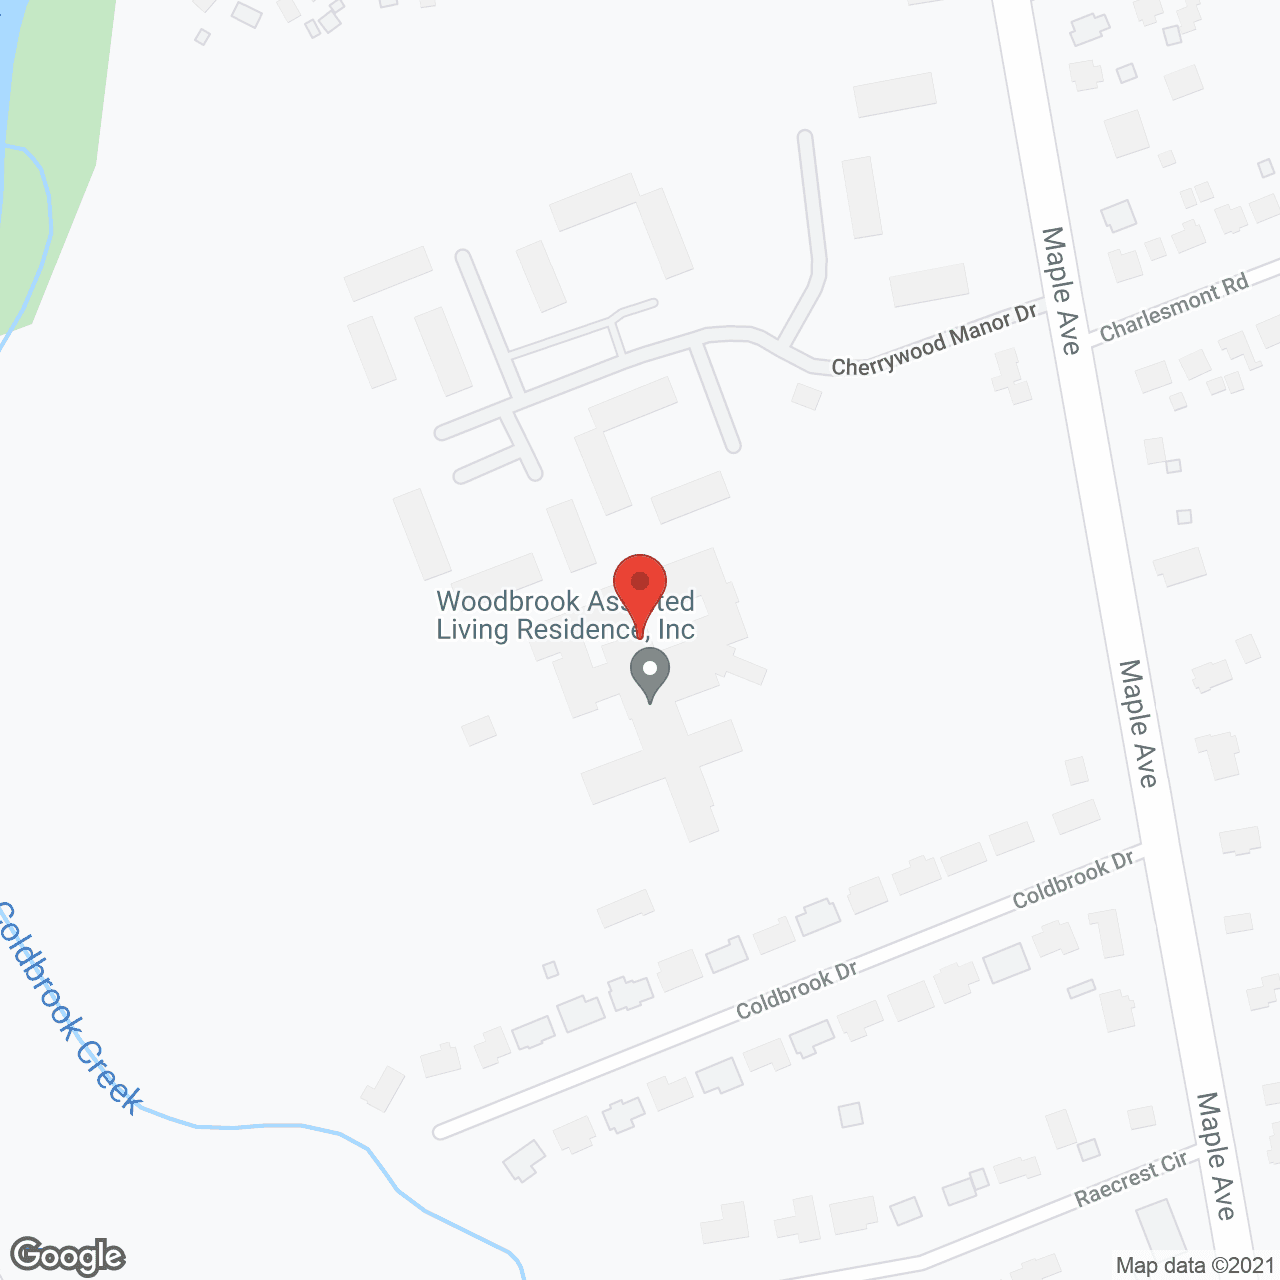 Woodbrook in google map